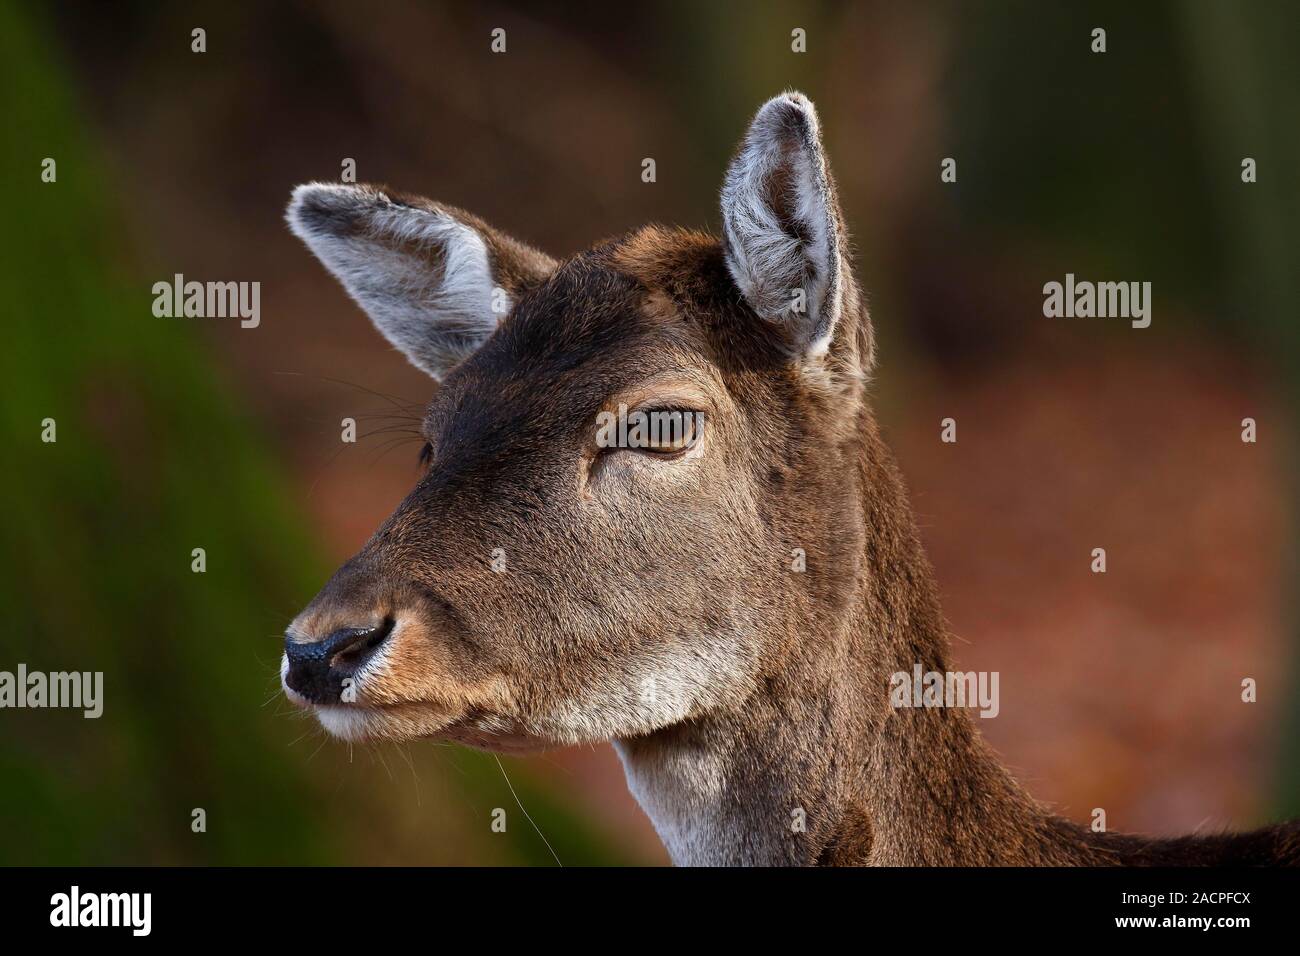 Fallow deer (Dama dama), female, animal portrait, Germany Stock Photo